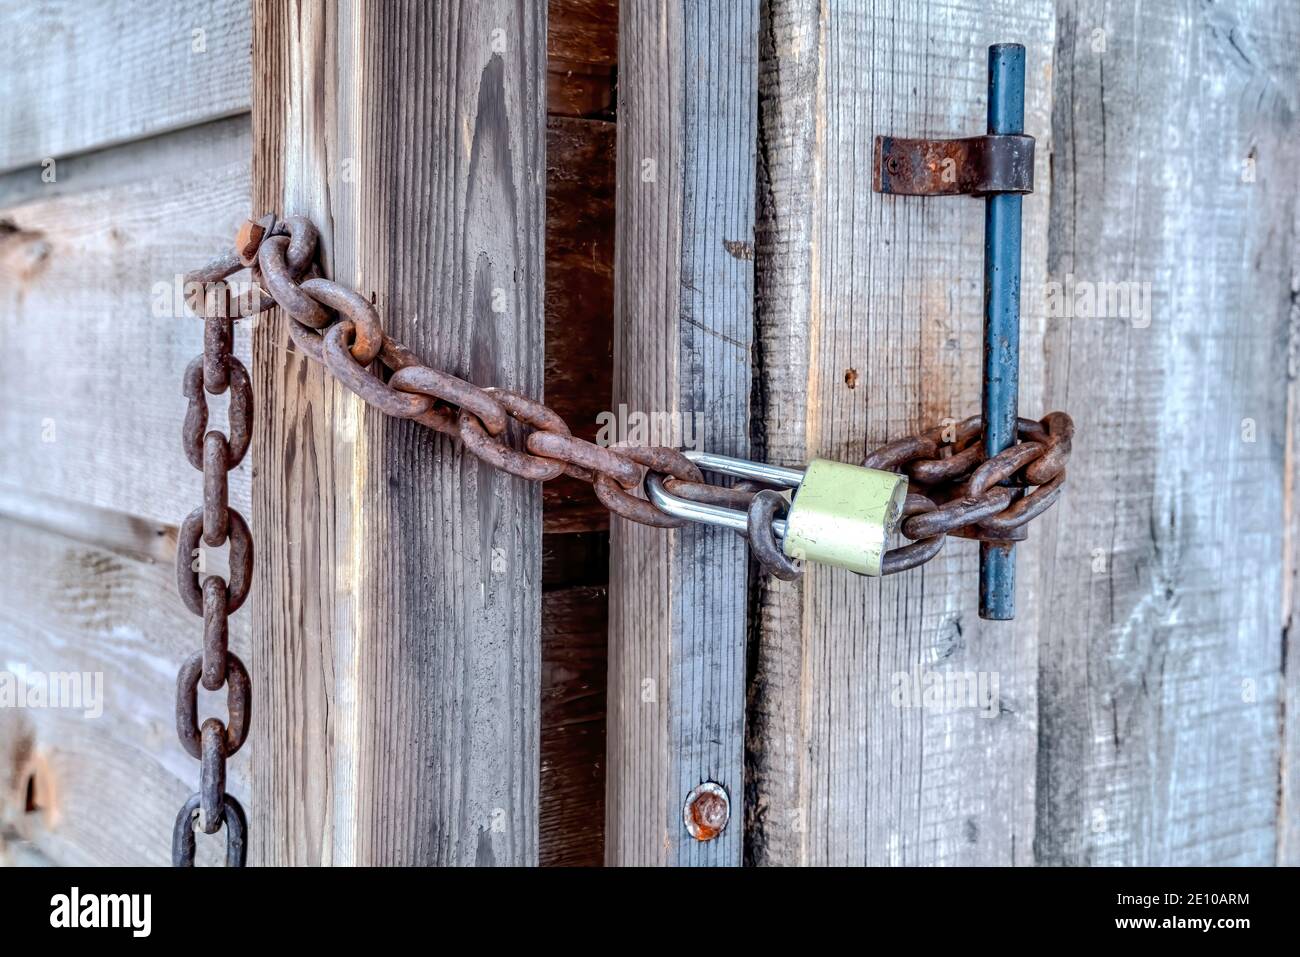 Padlock and rusty metal chain on the wooden door and handle of outdoor bathroom Stock Photo